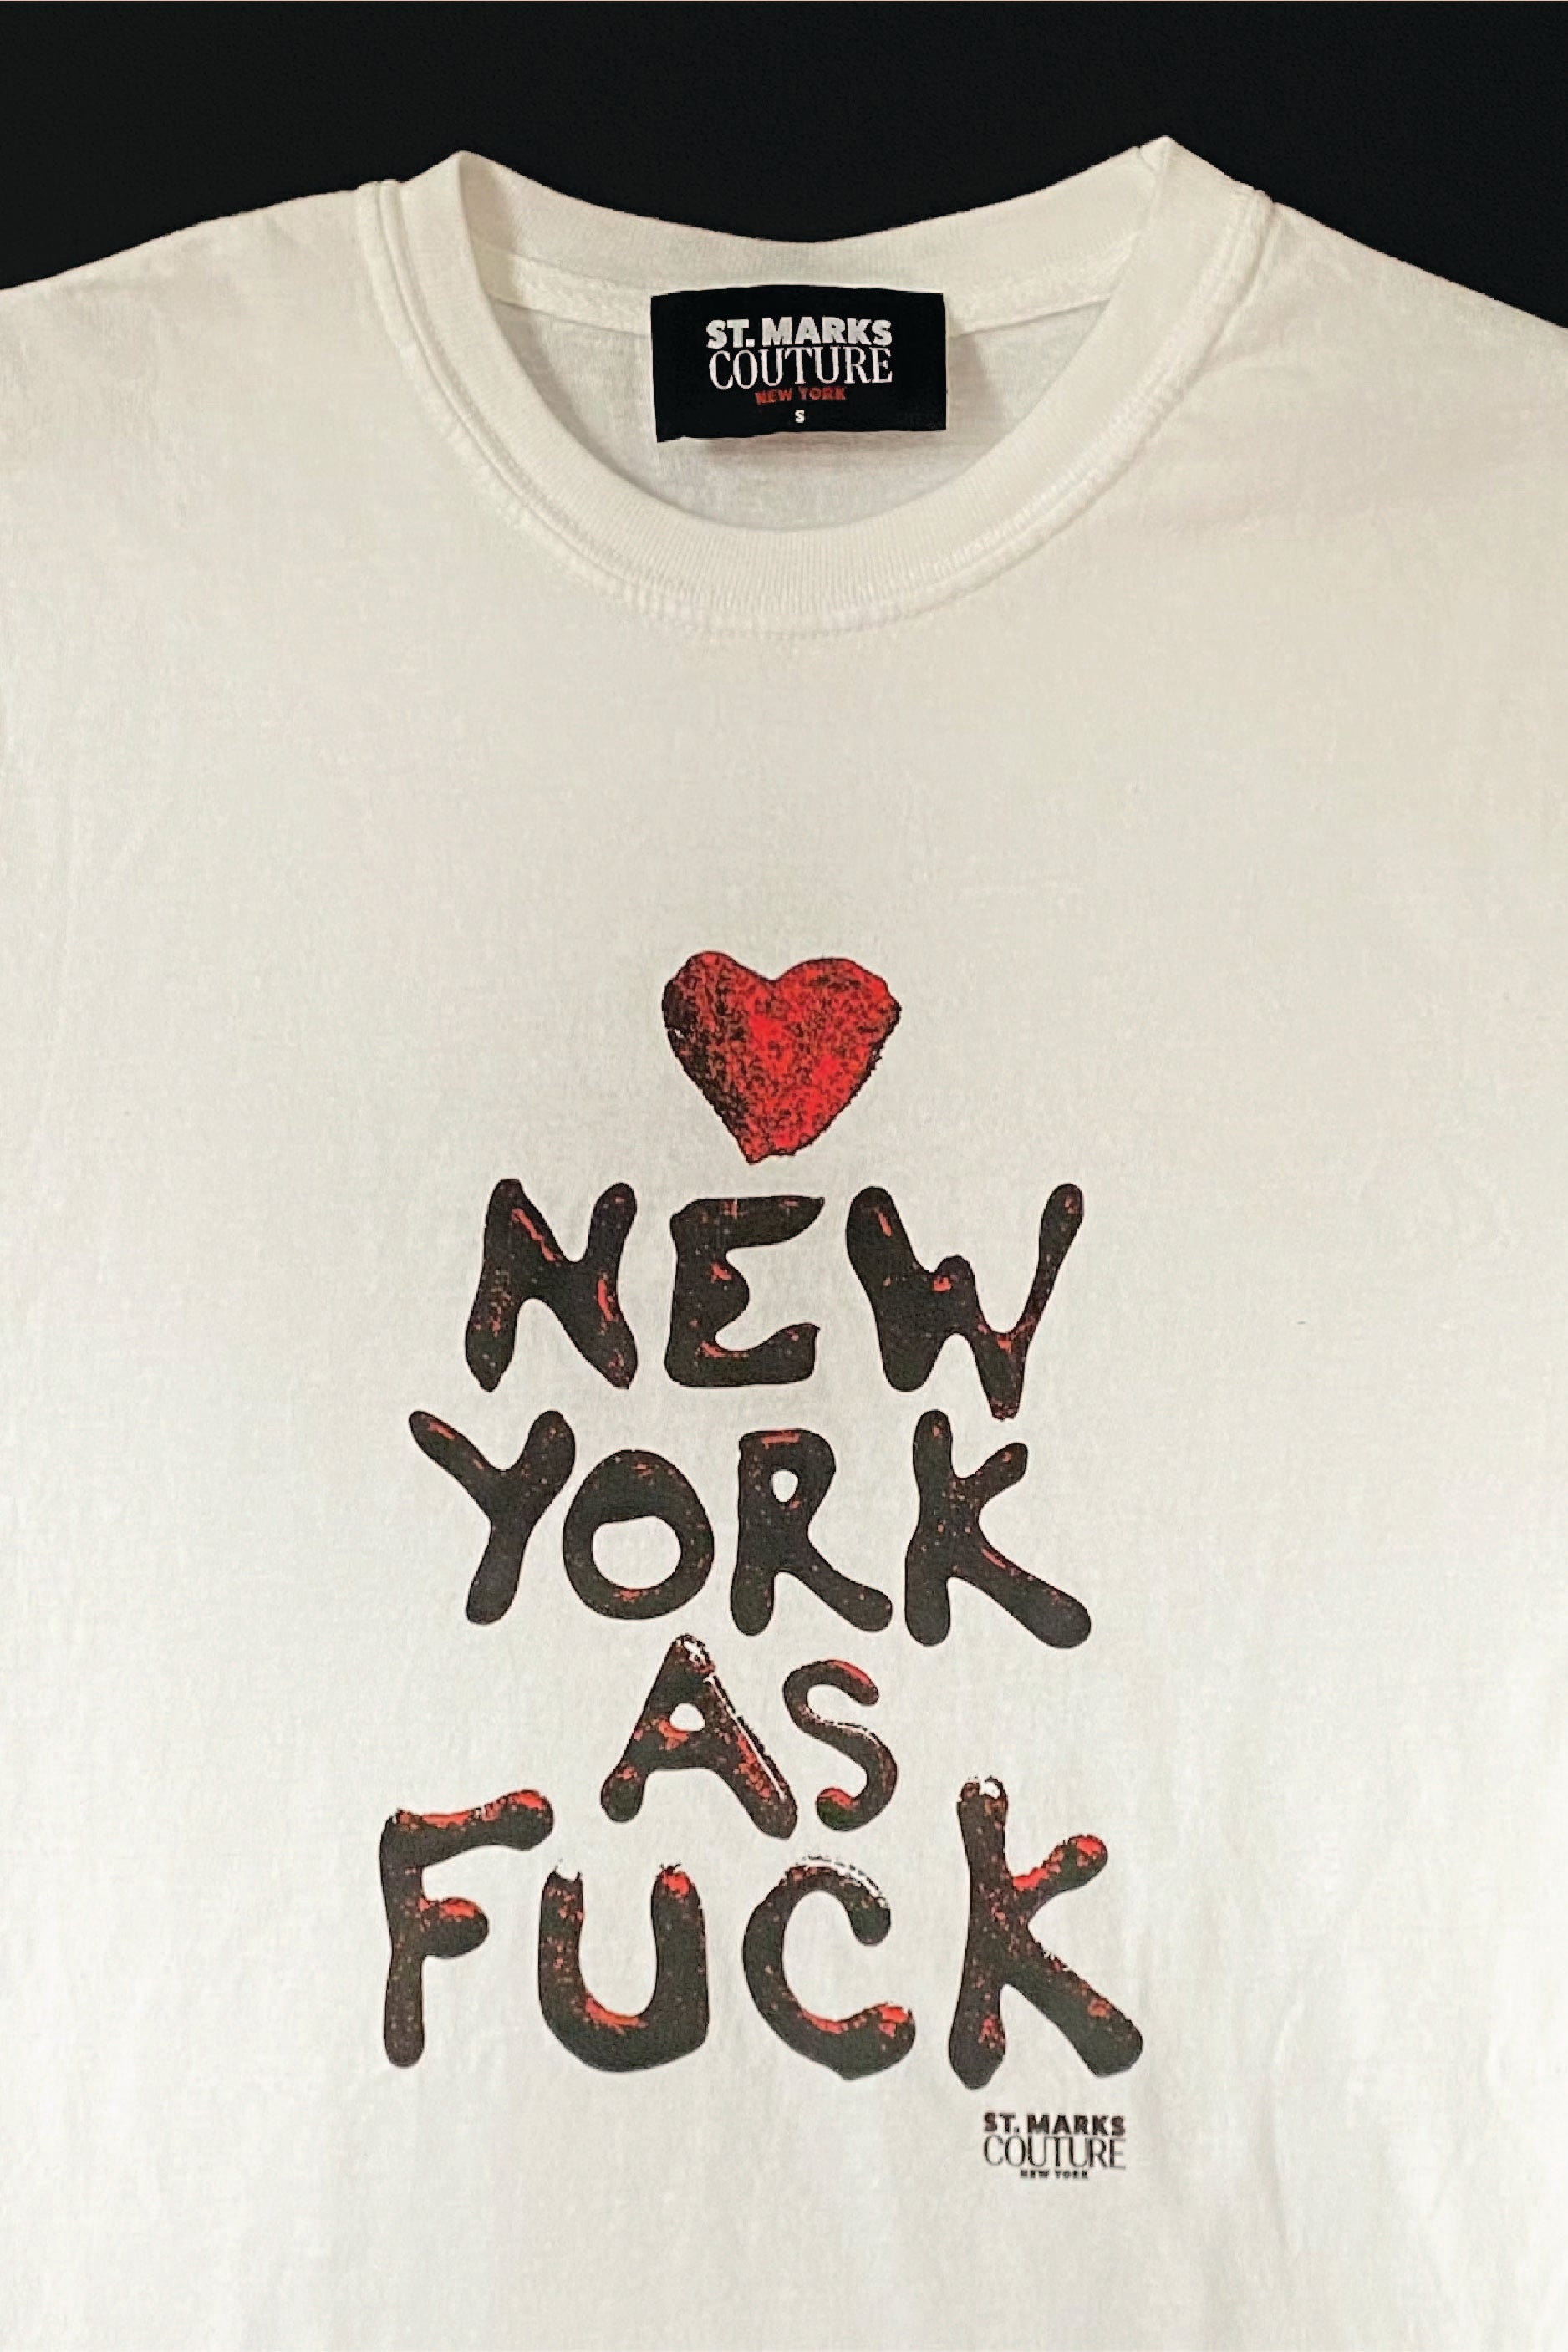 THE NEW YORK AS FUCK TEE